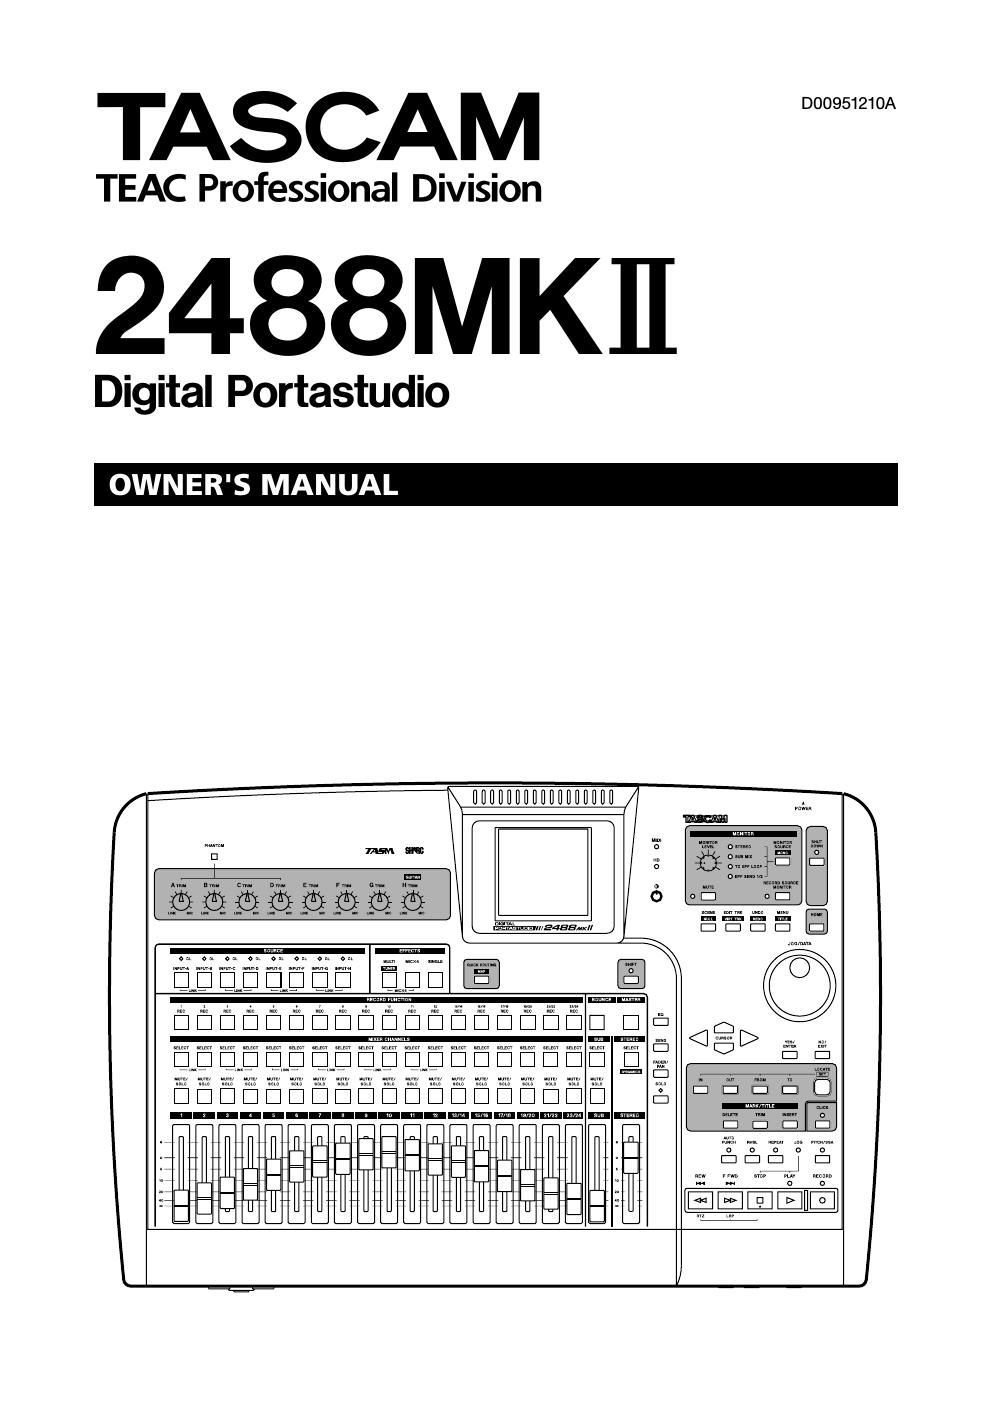 Tascam 2488MKII Manual